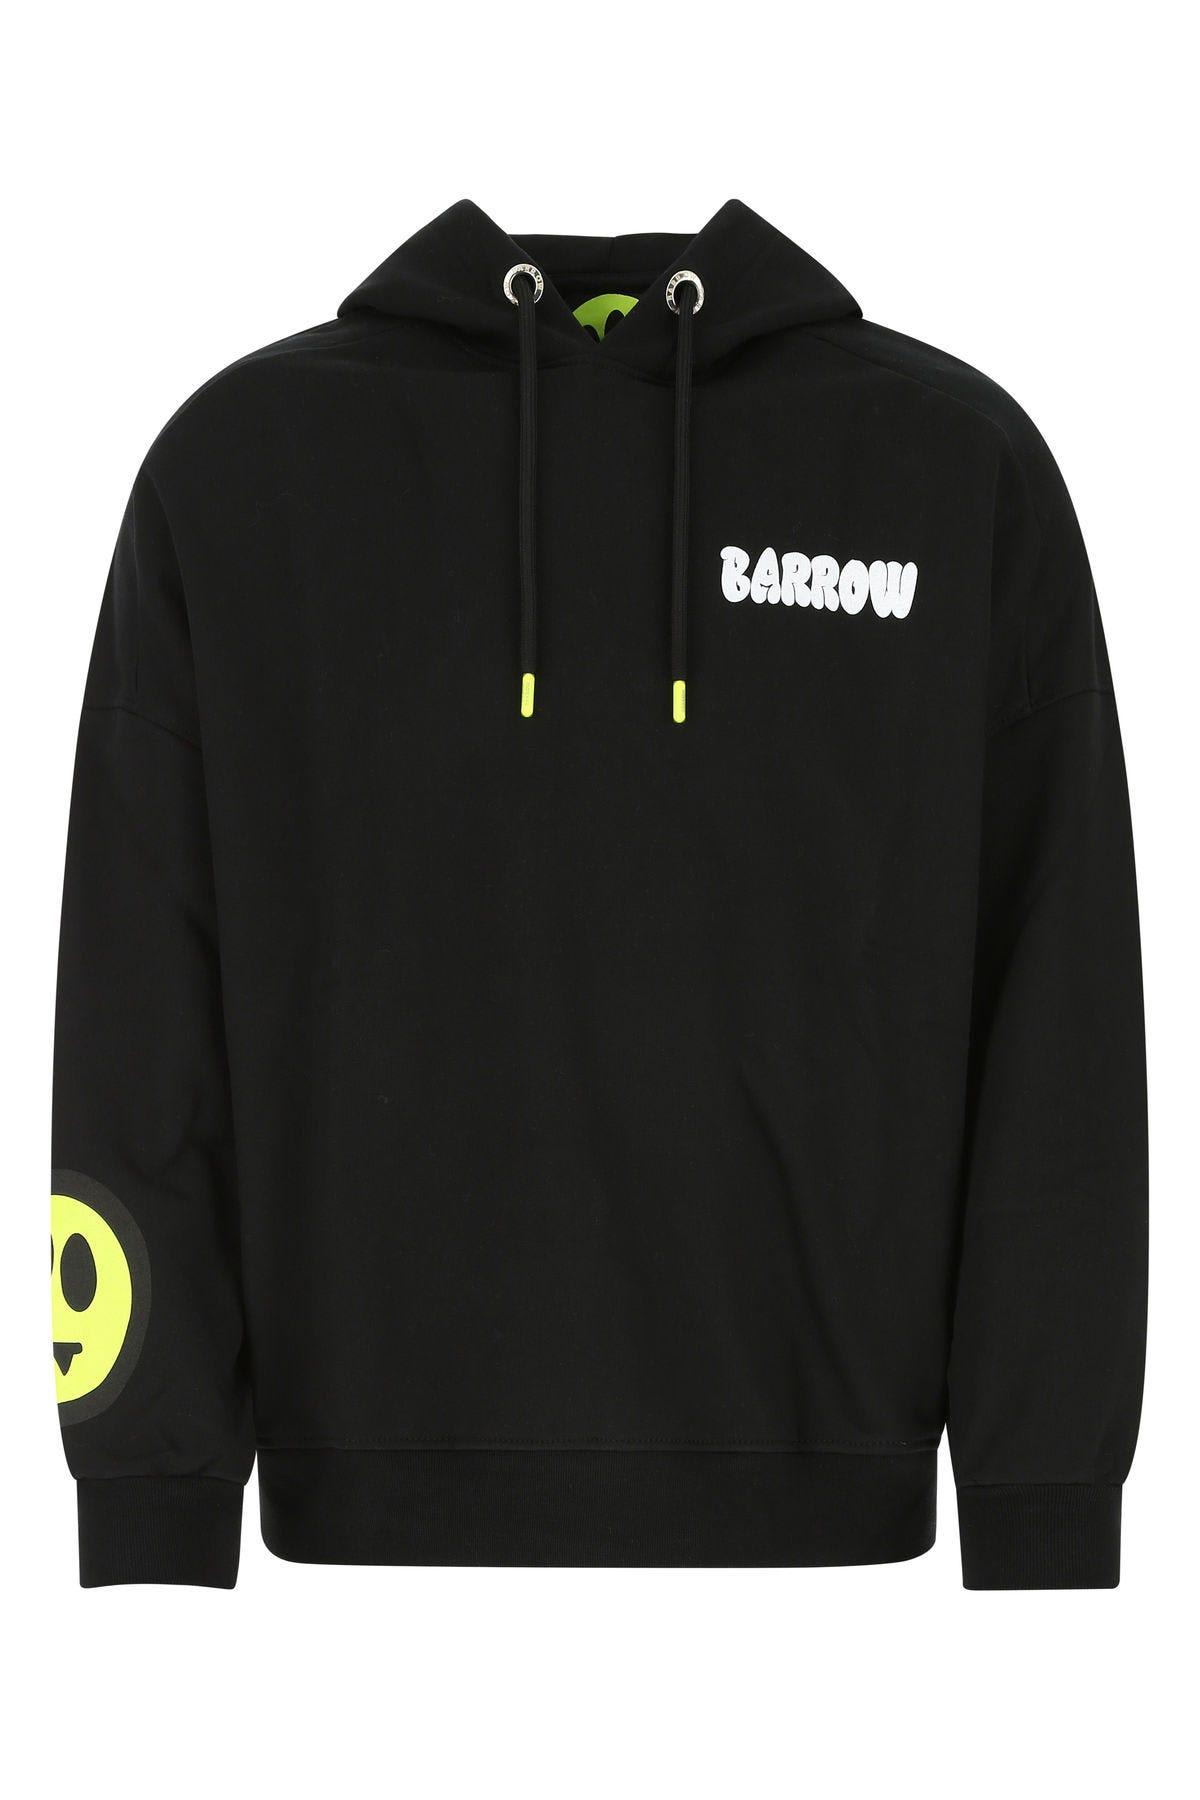 Barrow Black Cotton Oversize Sweatshirt